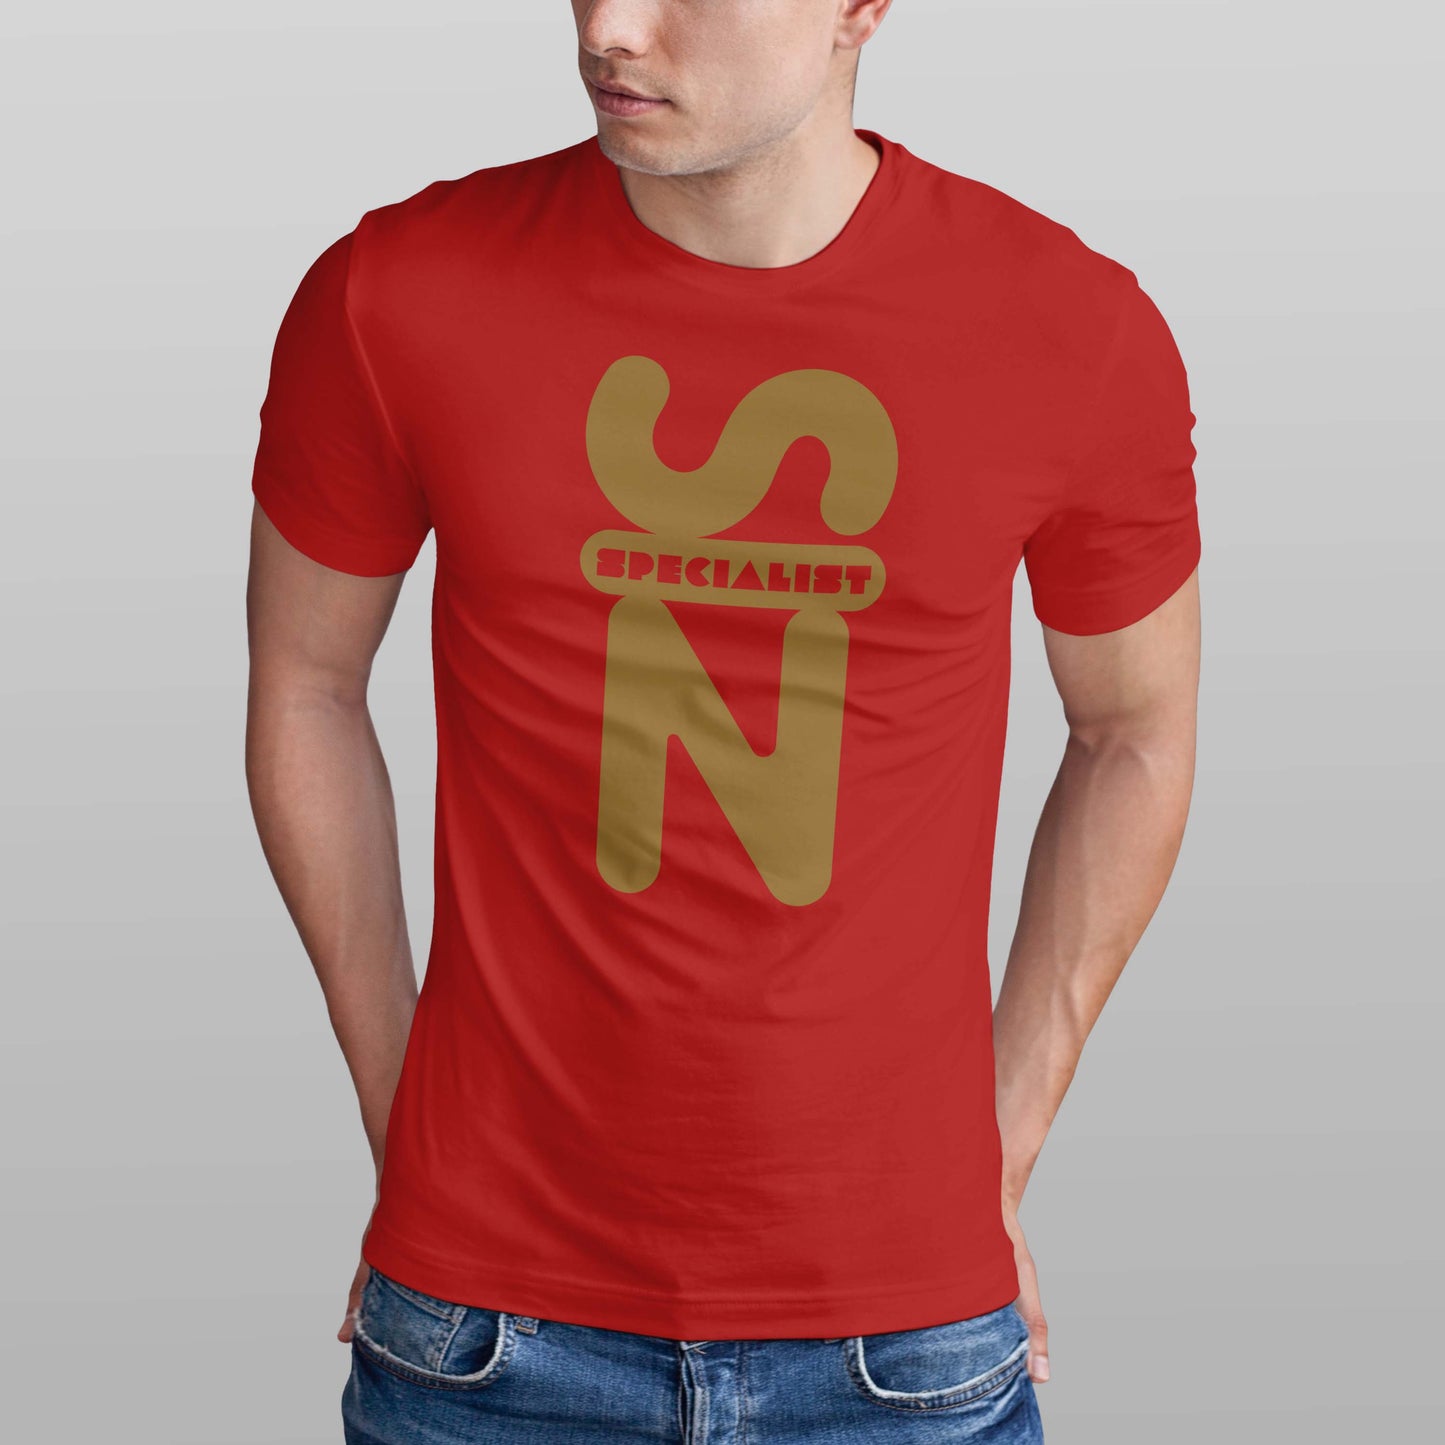 Sin Specialist Men's T-shirt (Brown)